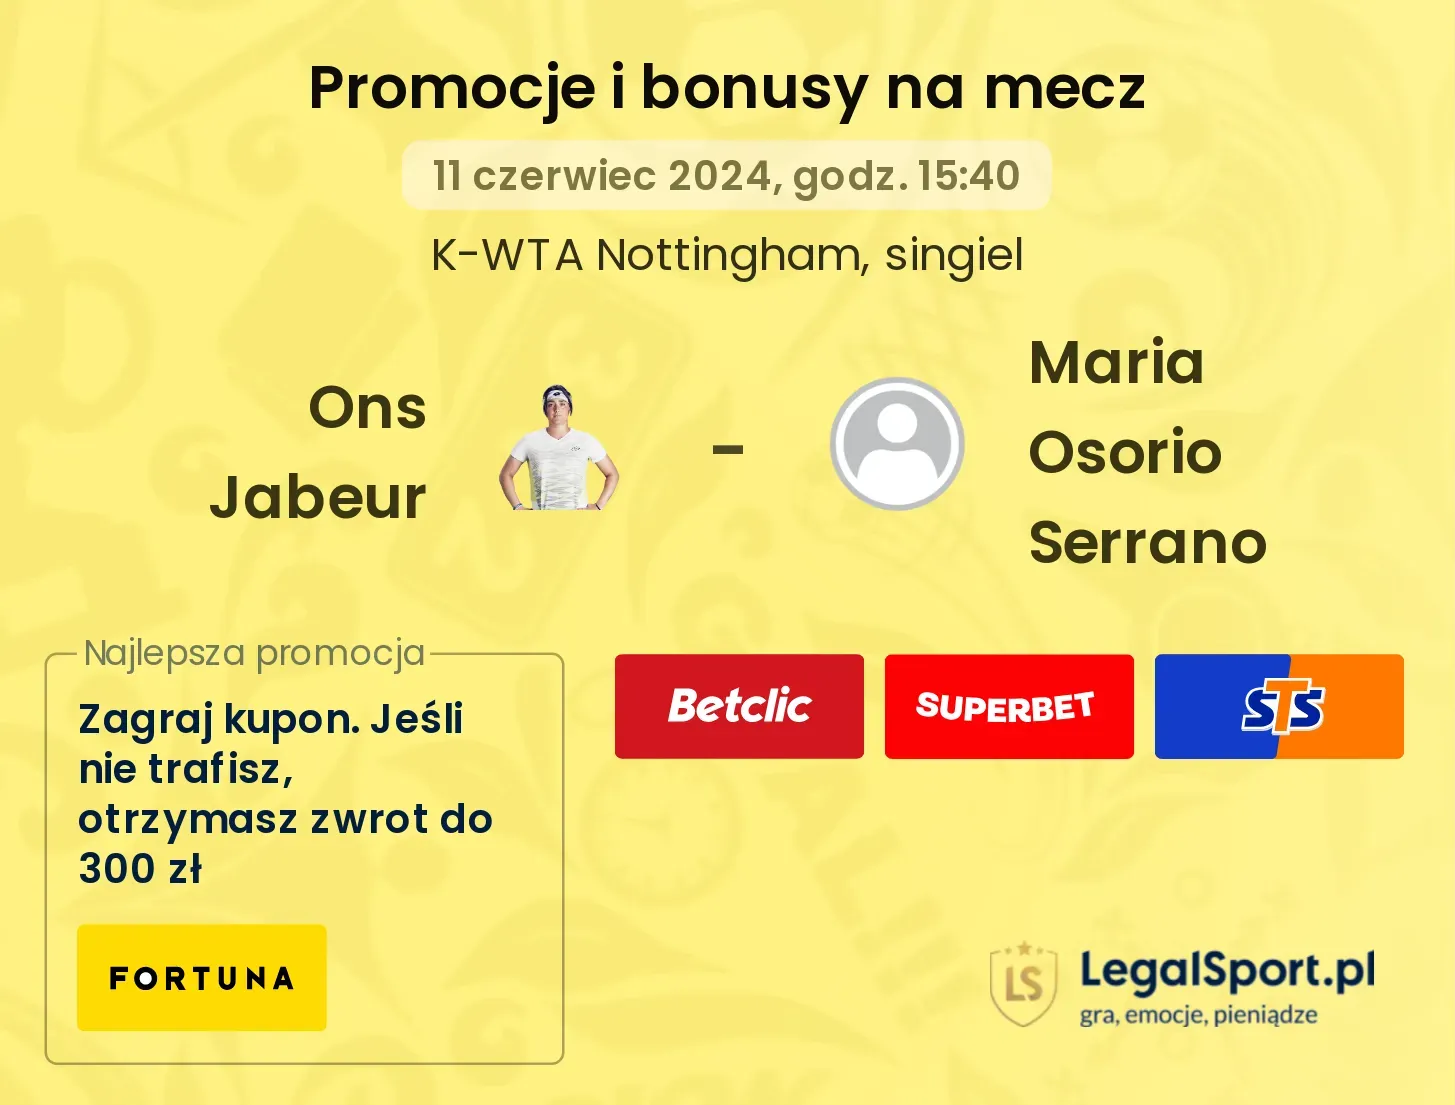 Ons Jabeur - Maria Osorio Serrano promocje bonusy na mecz